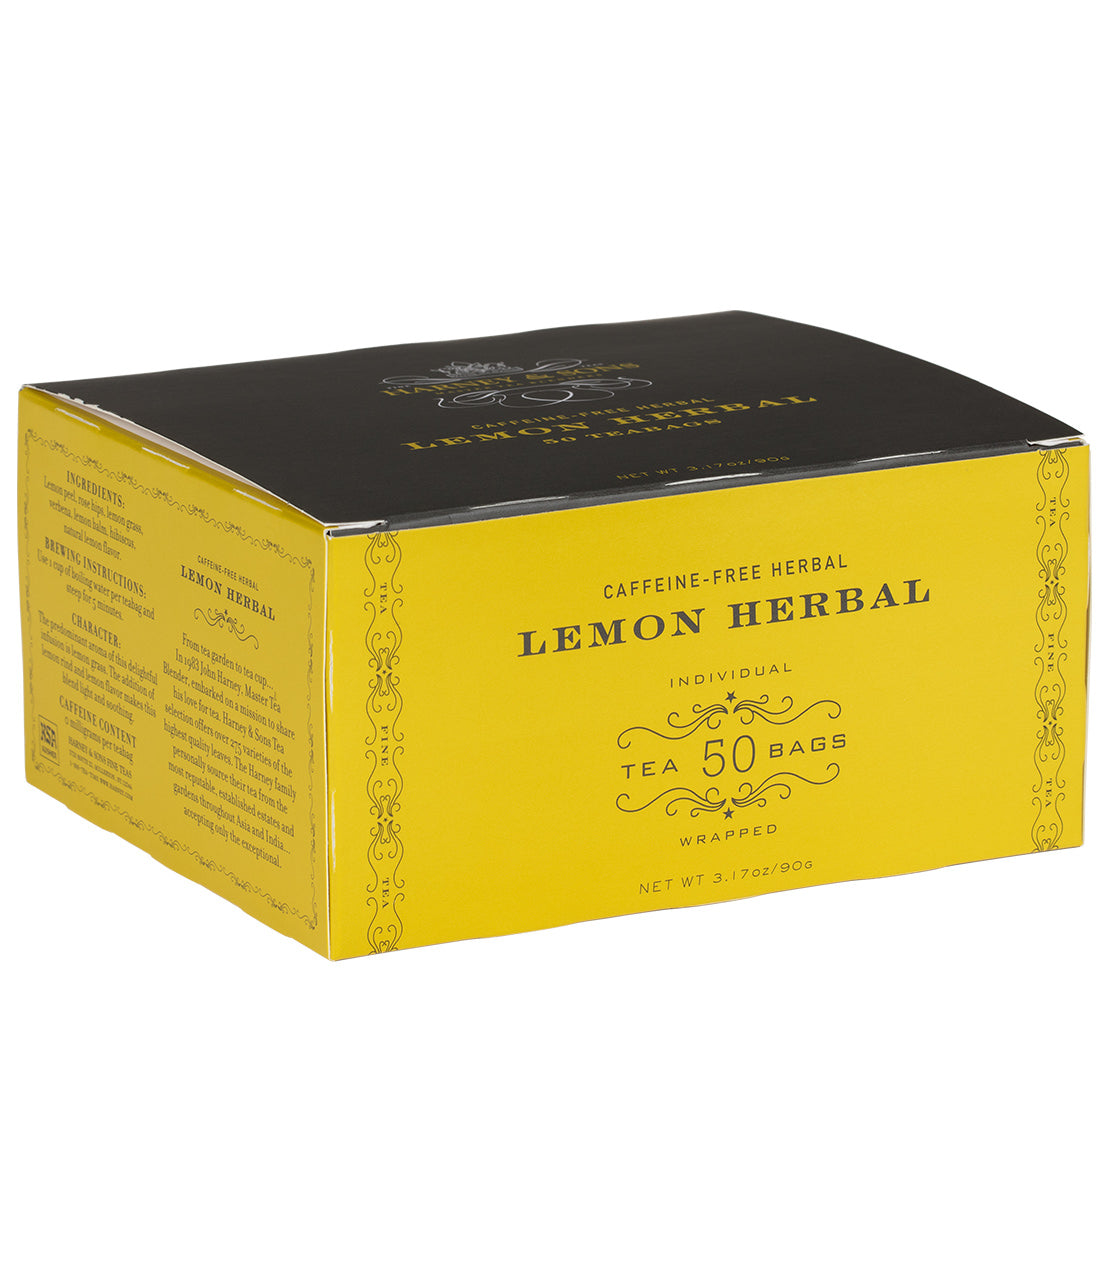 Lemon Herbal - Teabags 50 CT Foil Wrapped Teabags - Harney & Sons Fine Teas